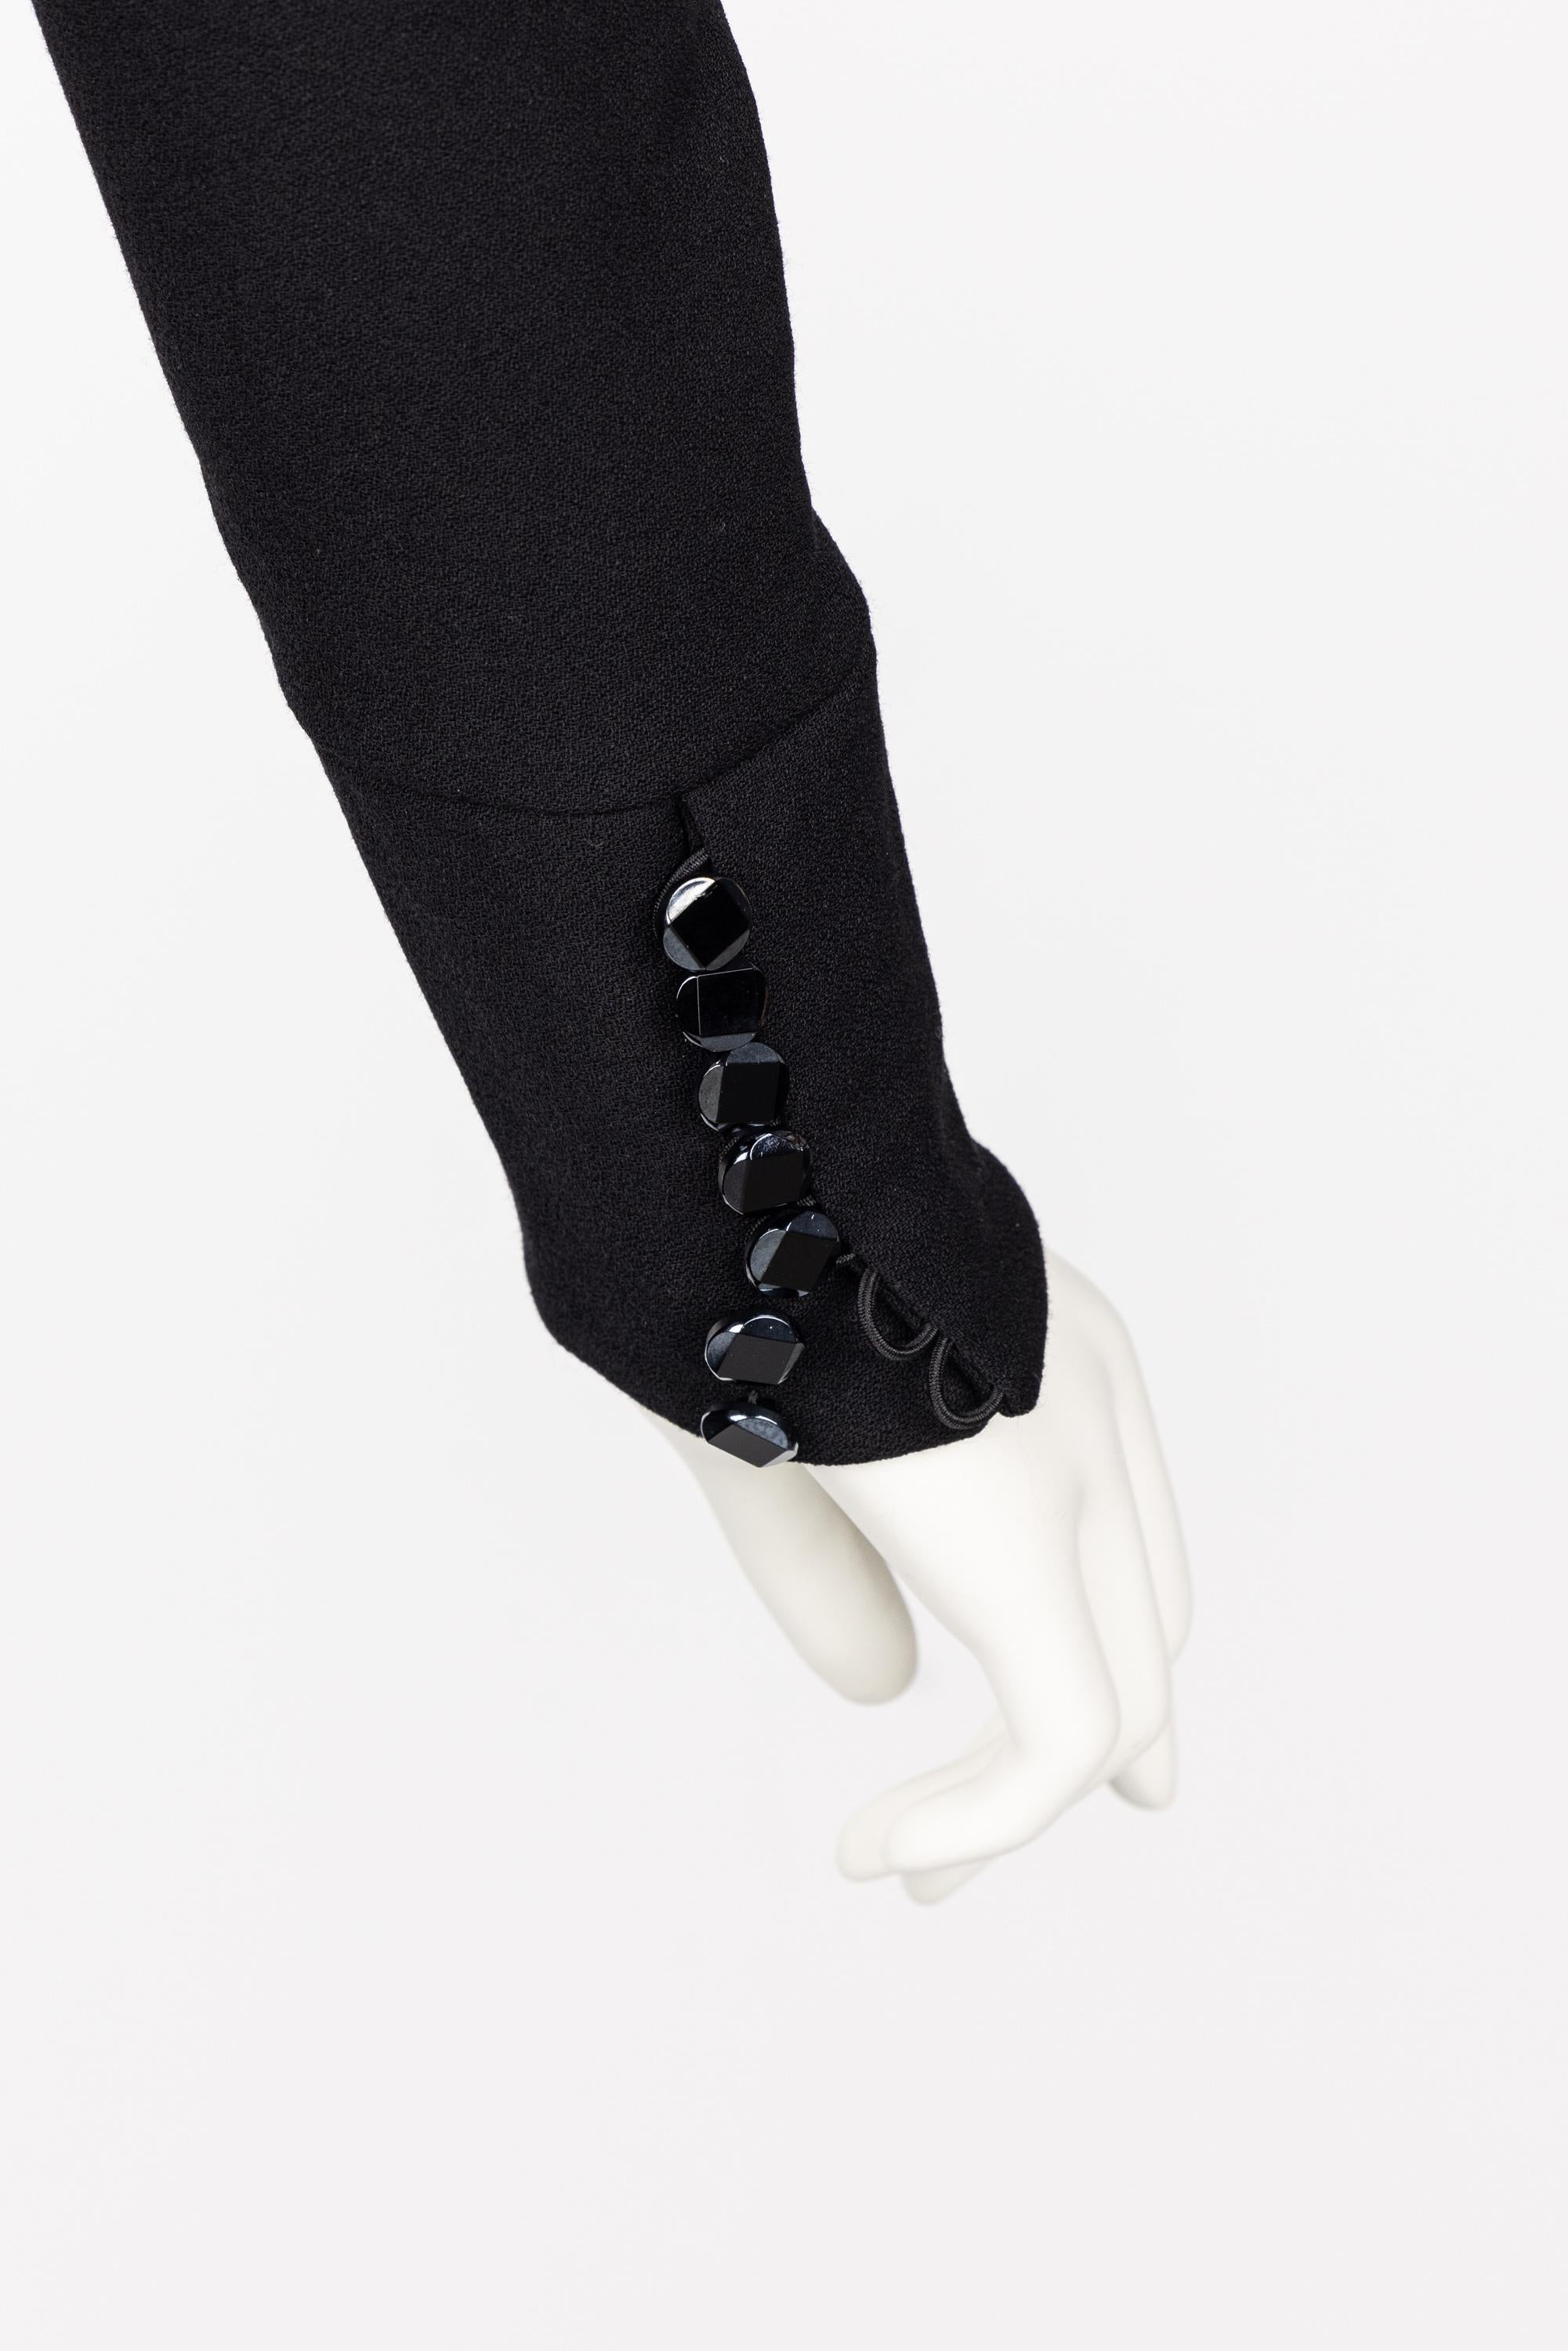 Ronald van der Kemp Demi Couture Fall 2018 Sculptural Black Dress  For Sale 4